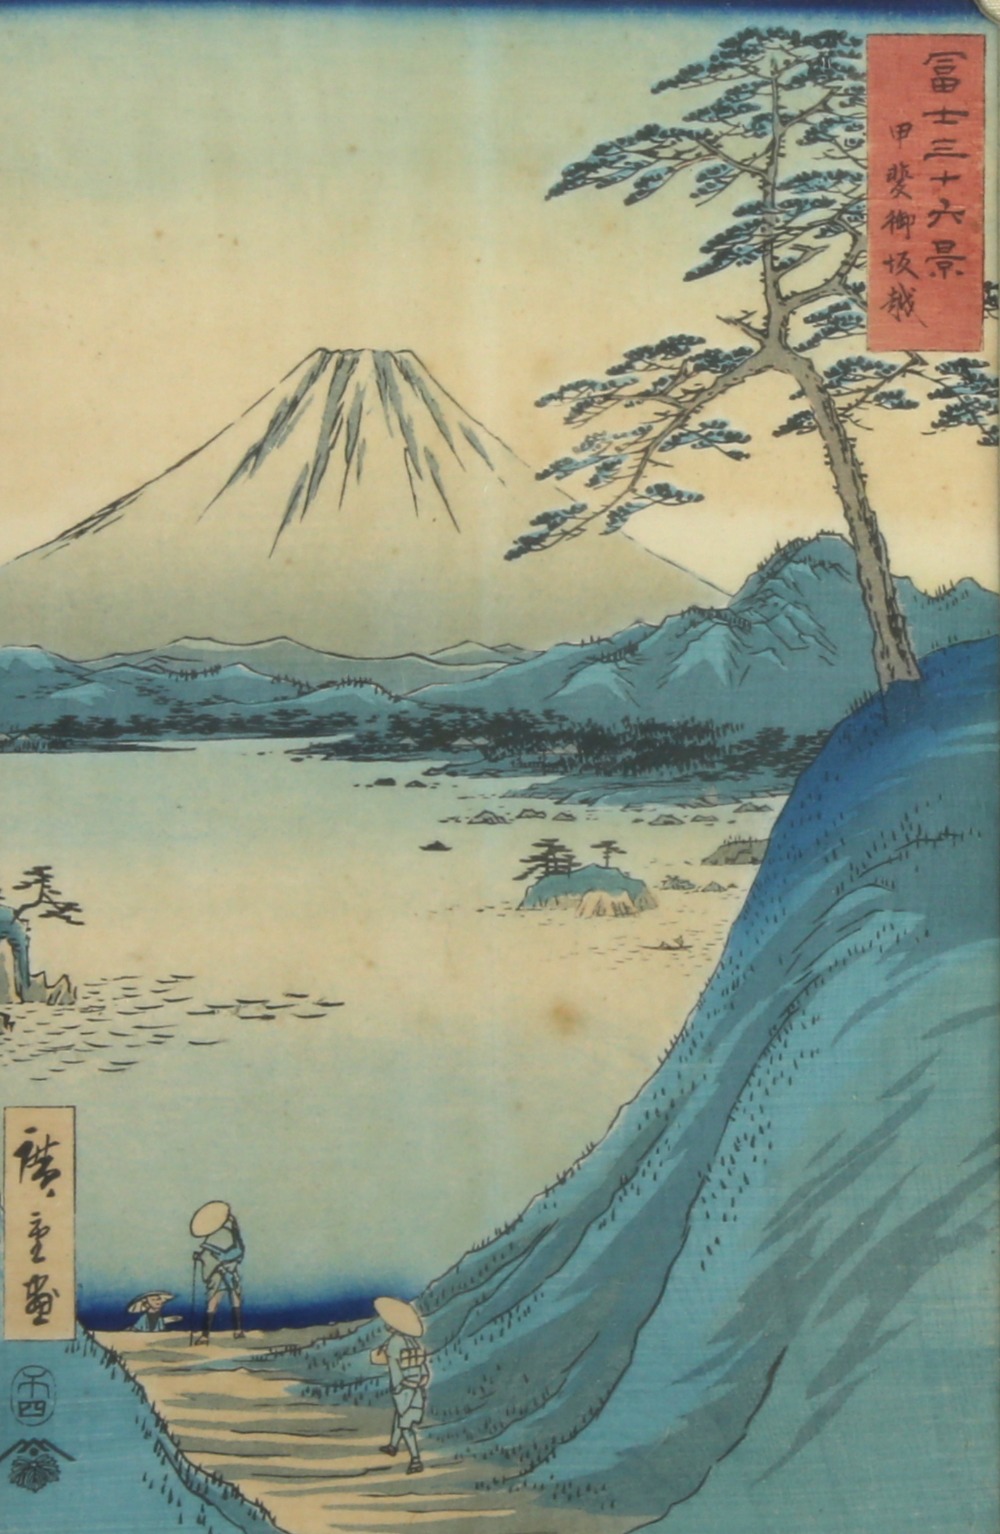 Ando Hiroshige, oban tate-e of Kai Misaka-Goe (Misaka Pass in Kai Province) from the Series of